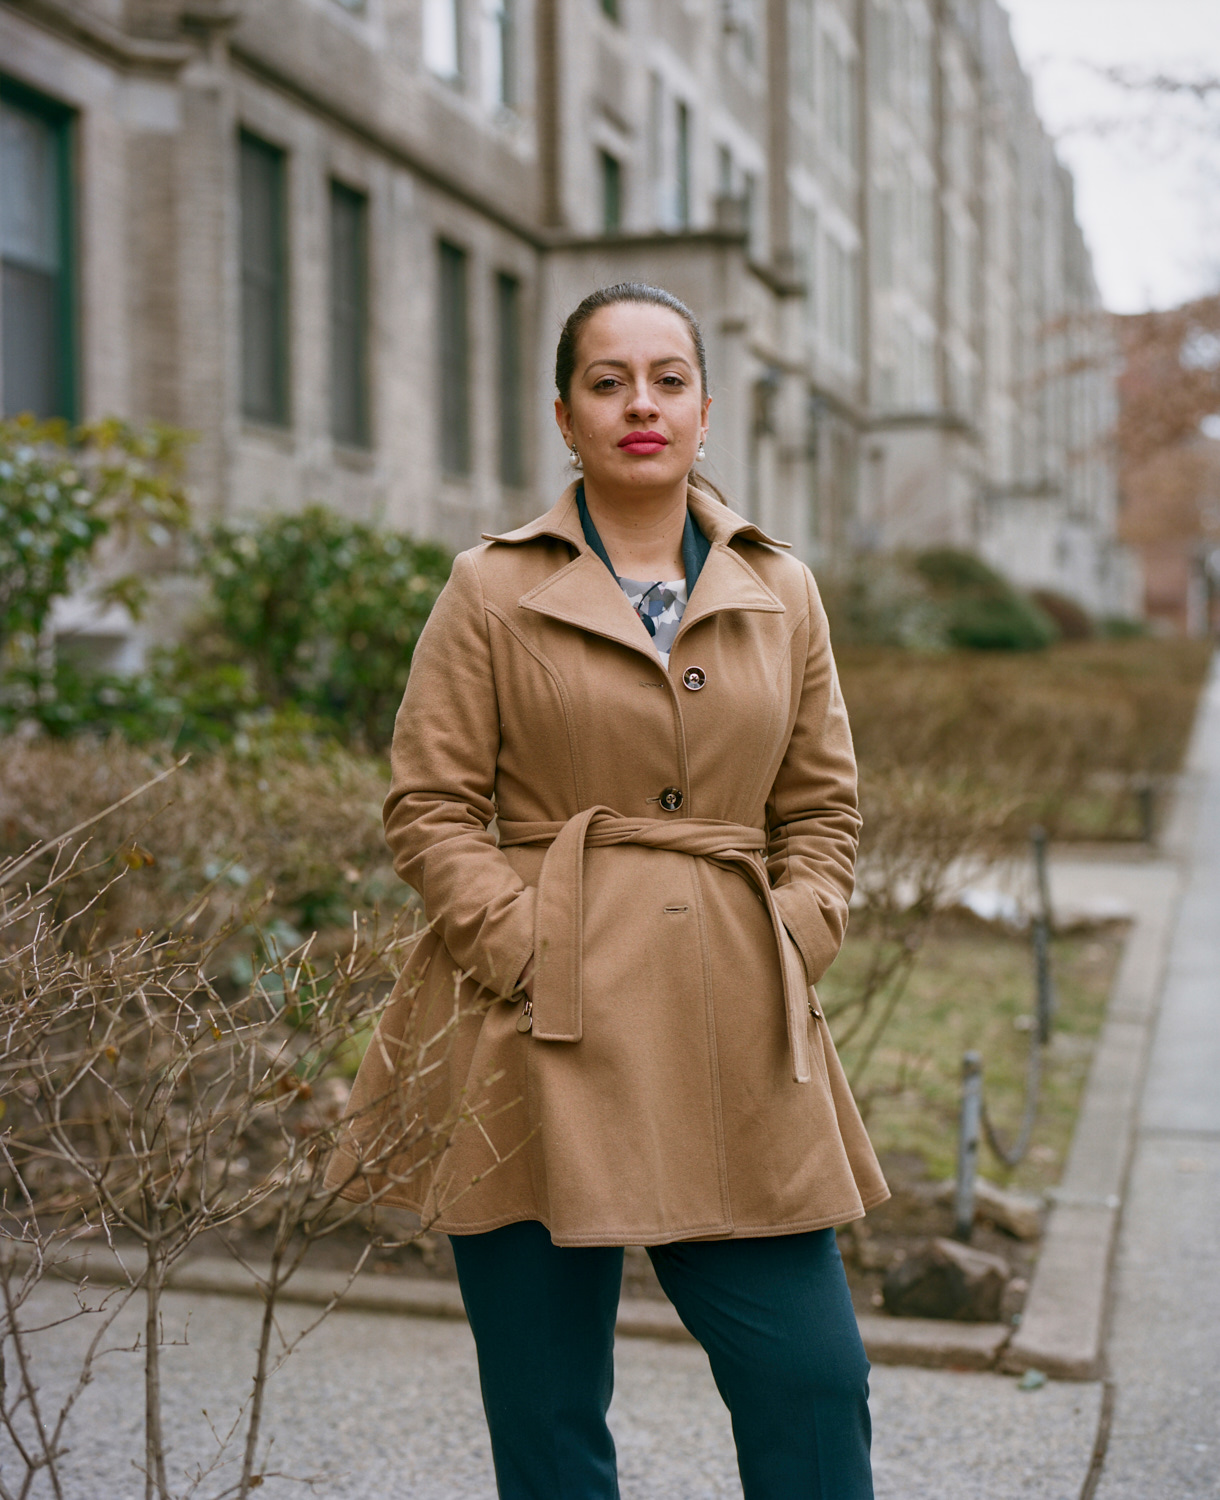 Portrait of Queens Dreamer Catalina Cruz for New York Magazine NYC